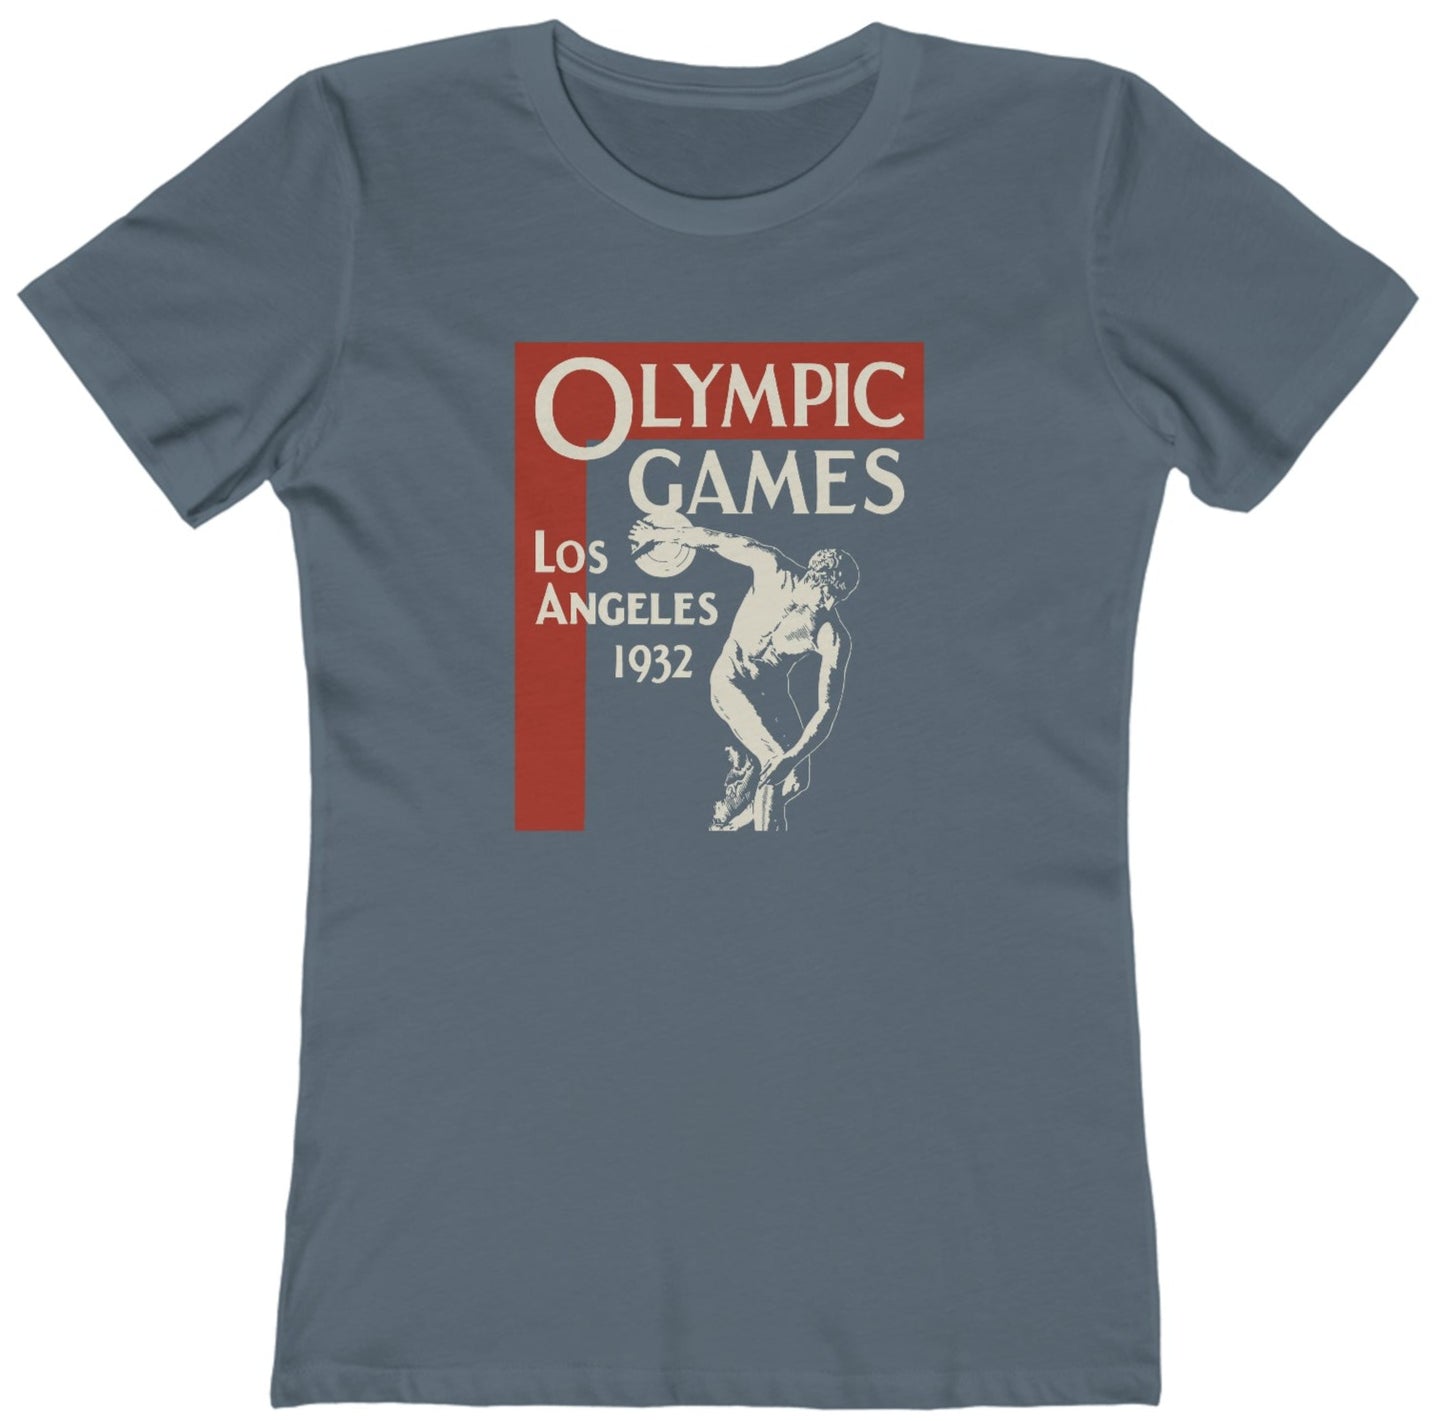 1932 Los Angeles Olympics t-shirt